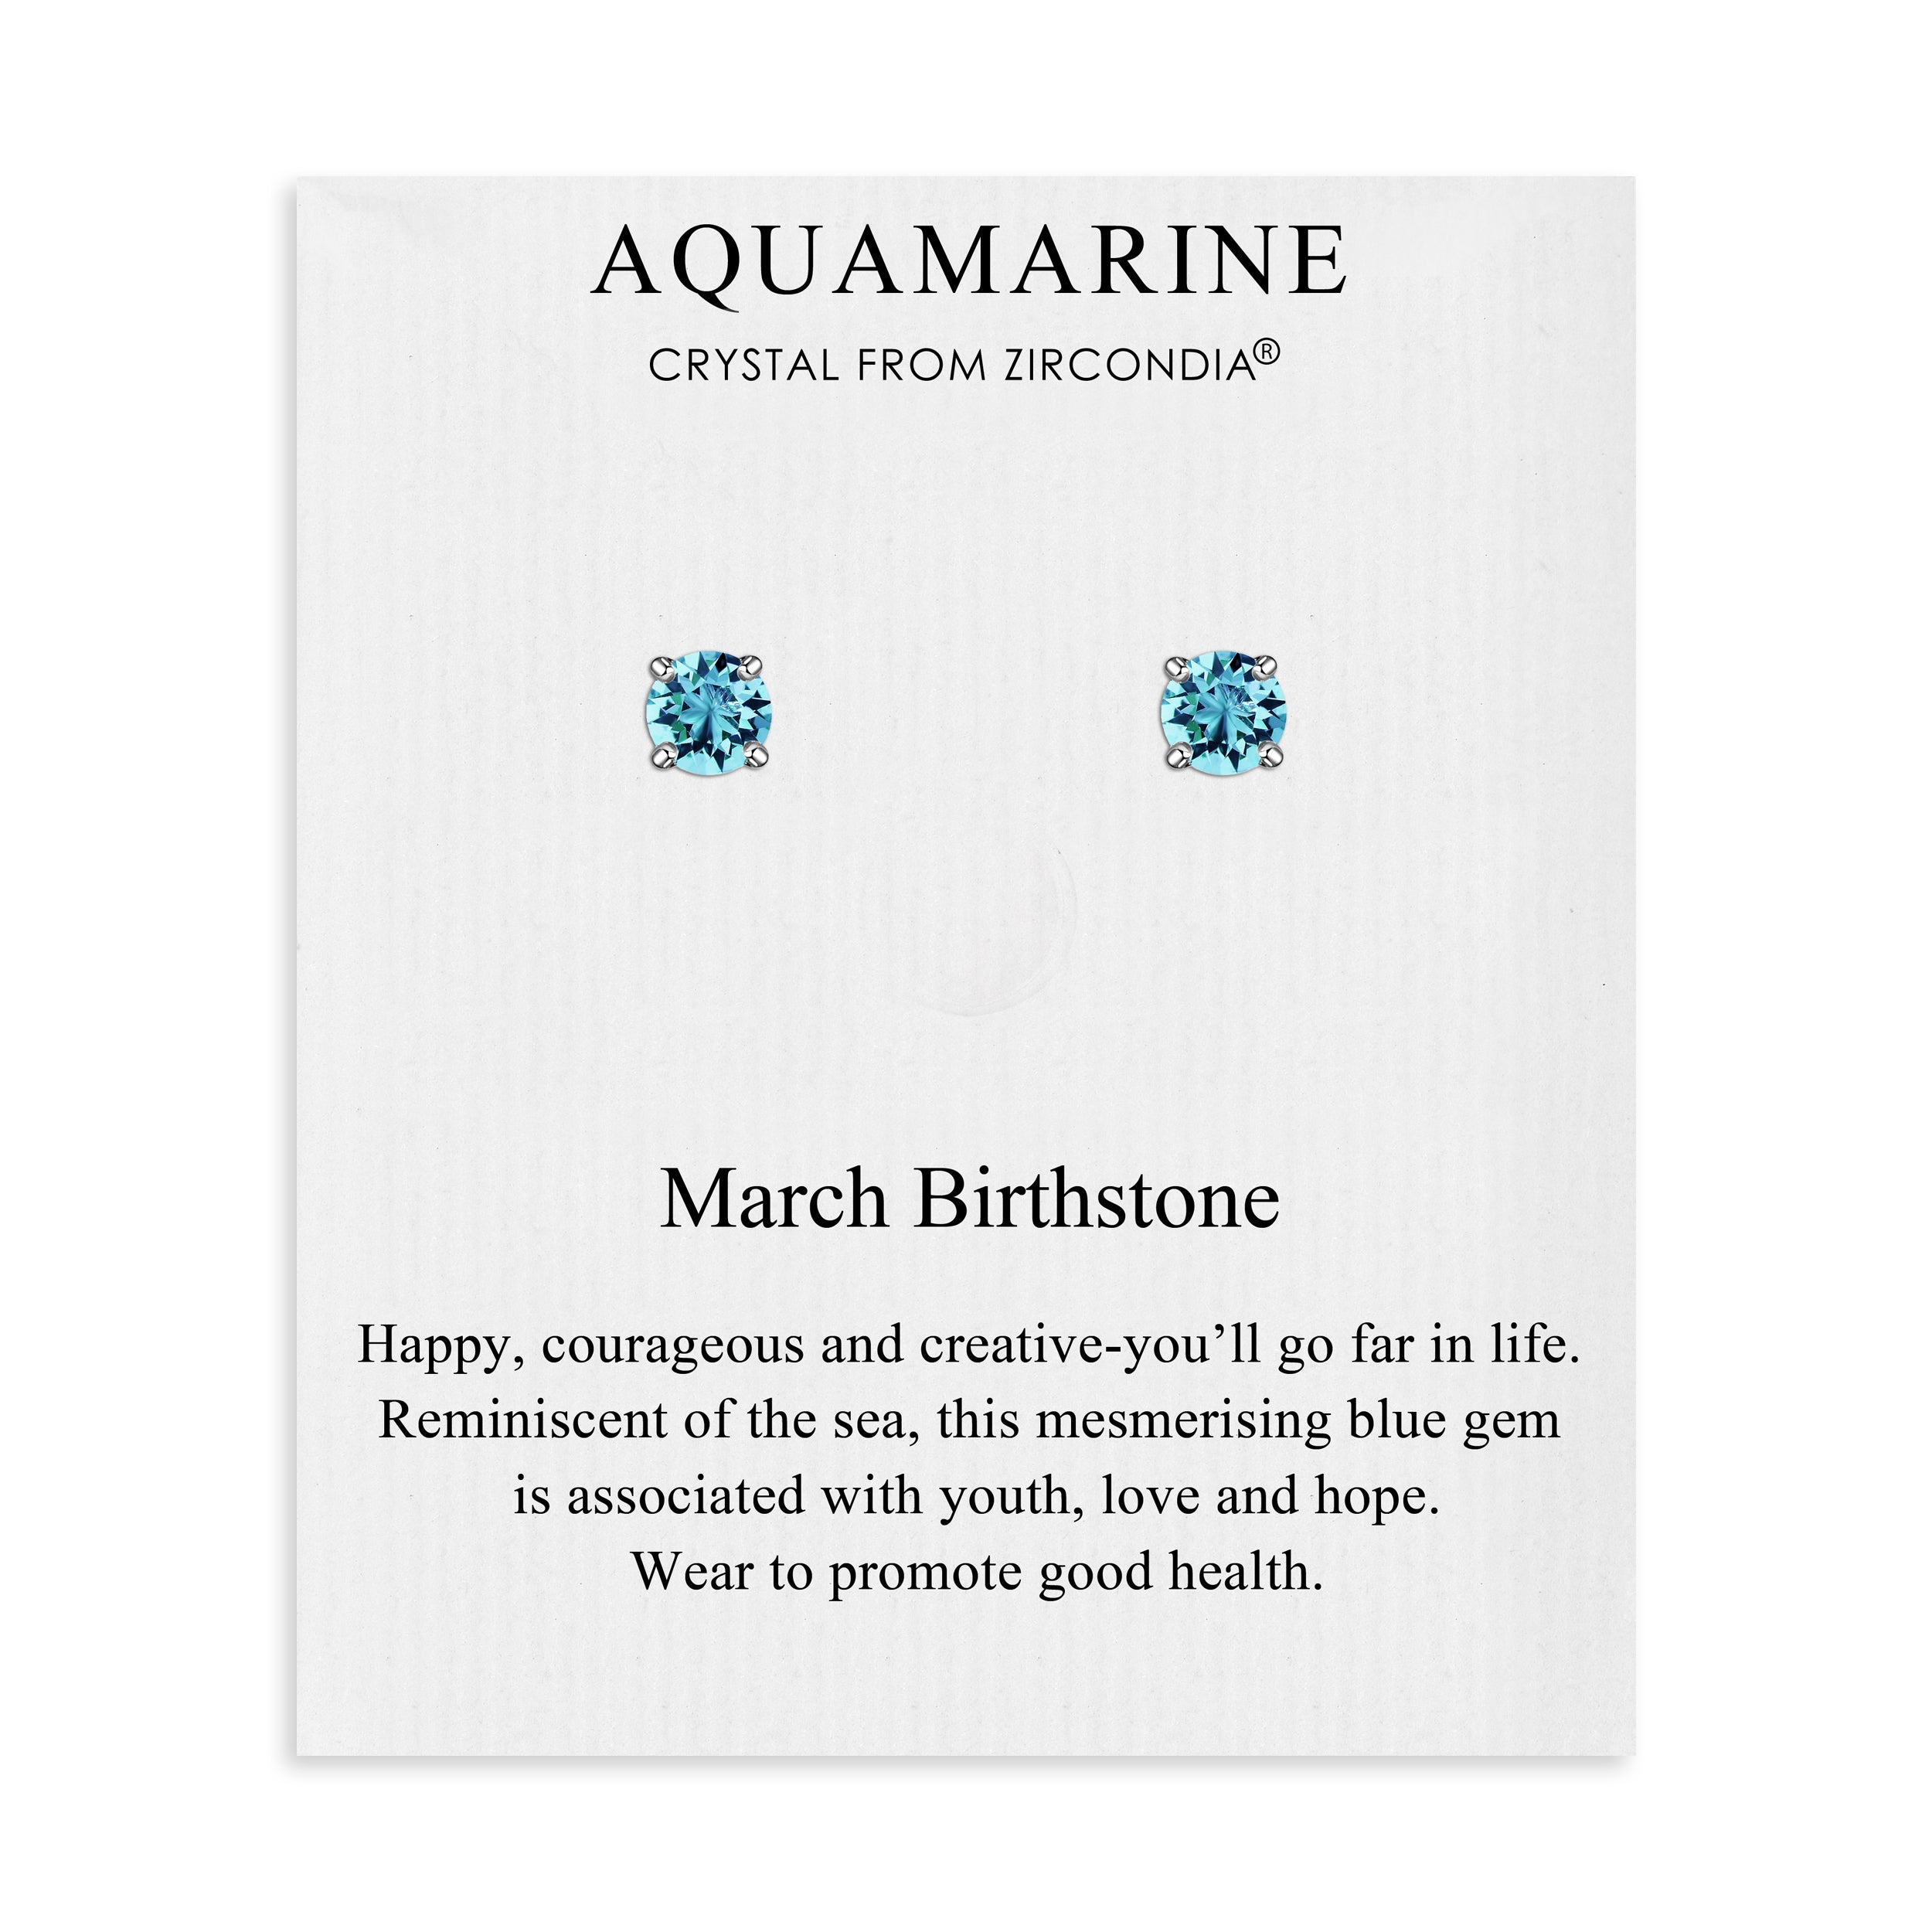 March (Aquamarine) Birthstone Earrings Created with Zircondia® Crystals by Philip Jones Jewellery